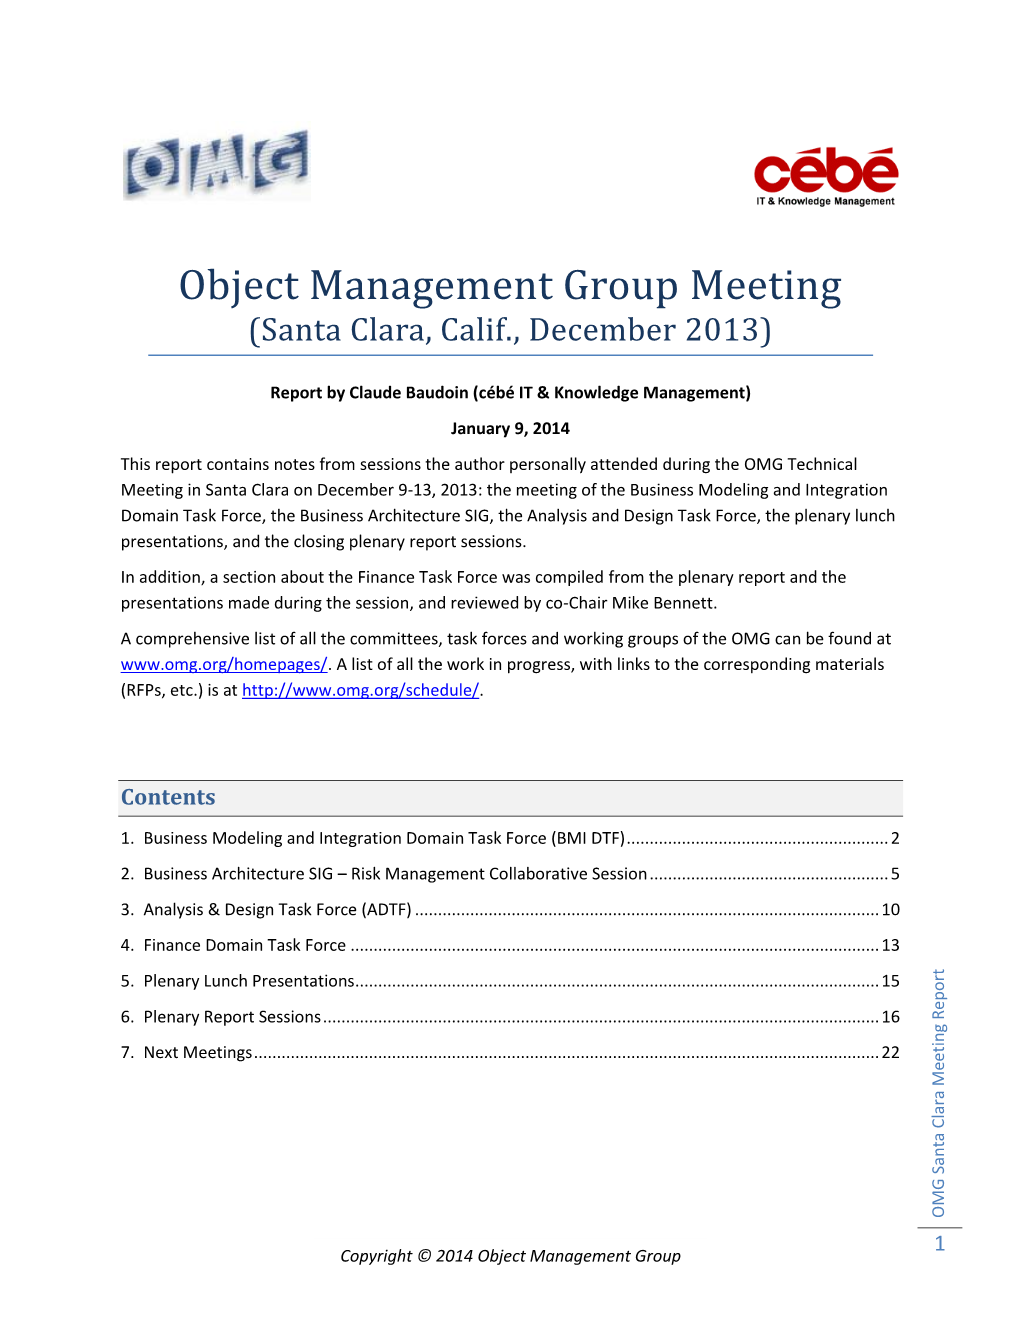 Object Management Group Meeting (Santa Clara, Calif., December 2013)